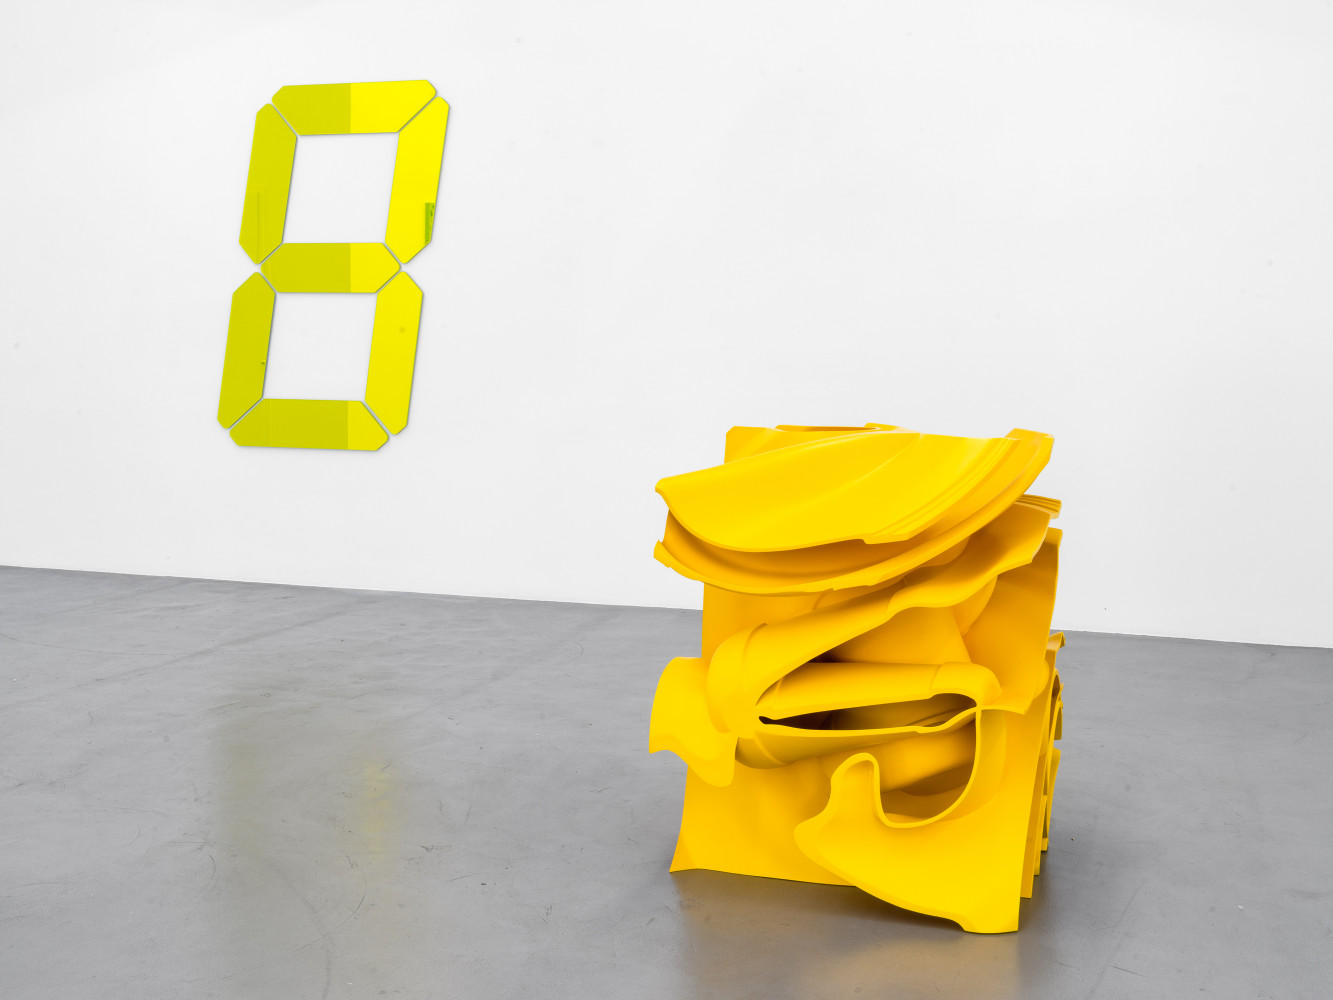 Tony Cragg, Tatsuo Miyajima, Installationsansicht, Buchmann Galerie, 2020